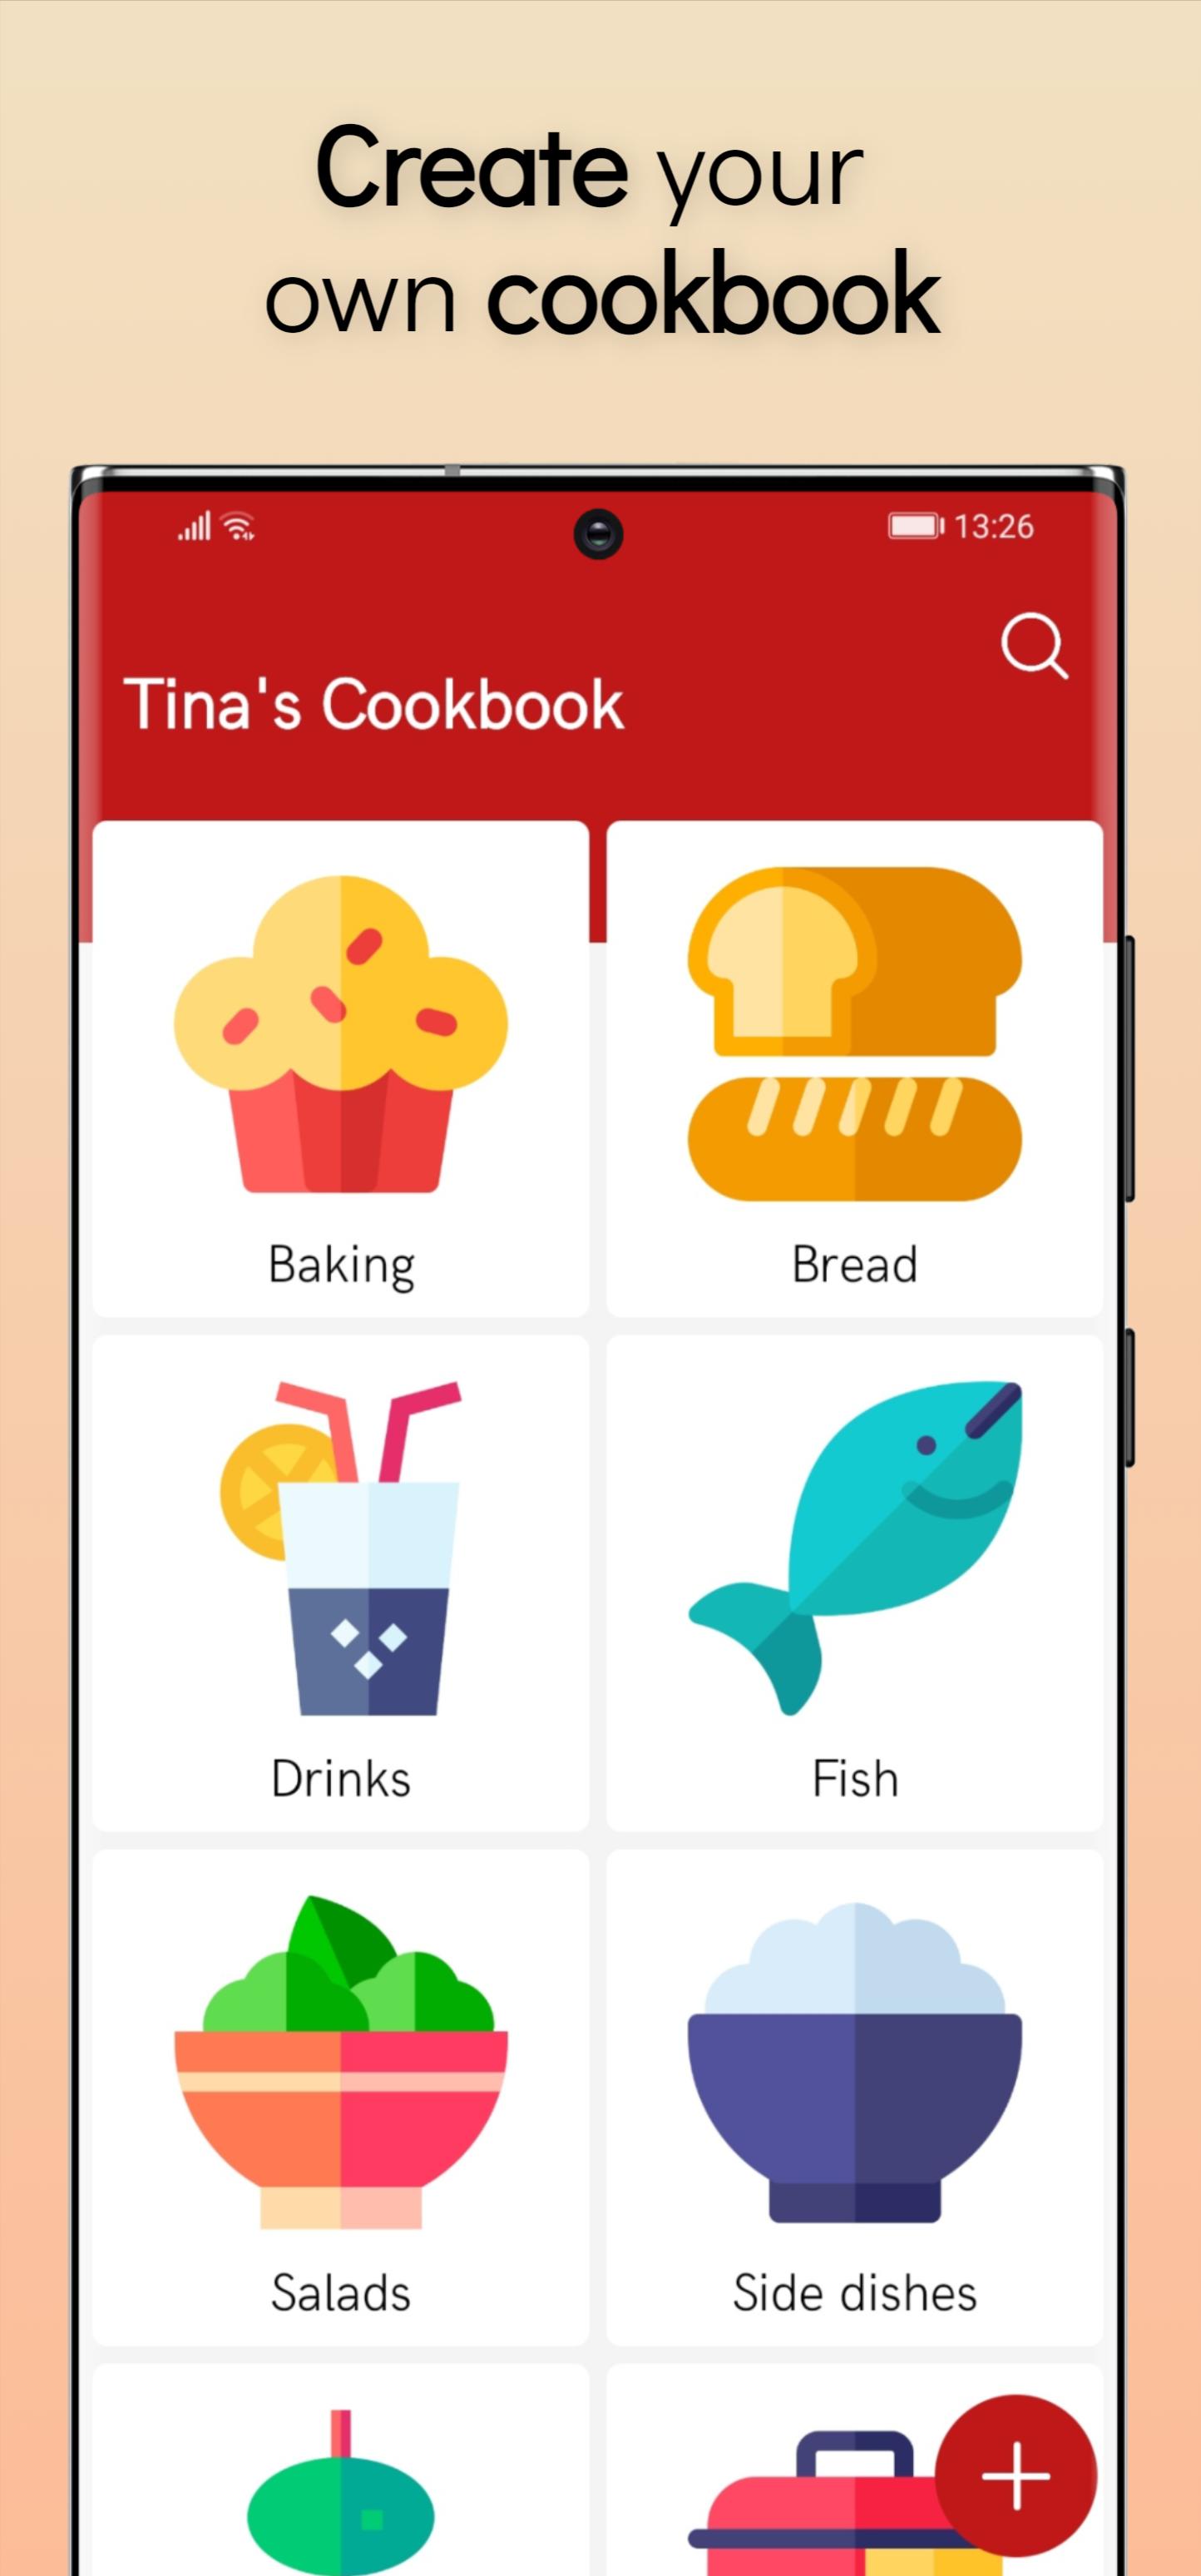 My Cookbook. Android Studio Cookbook.